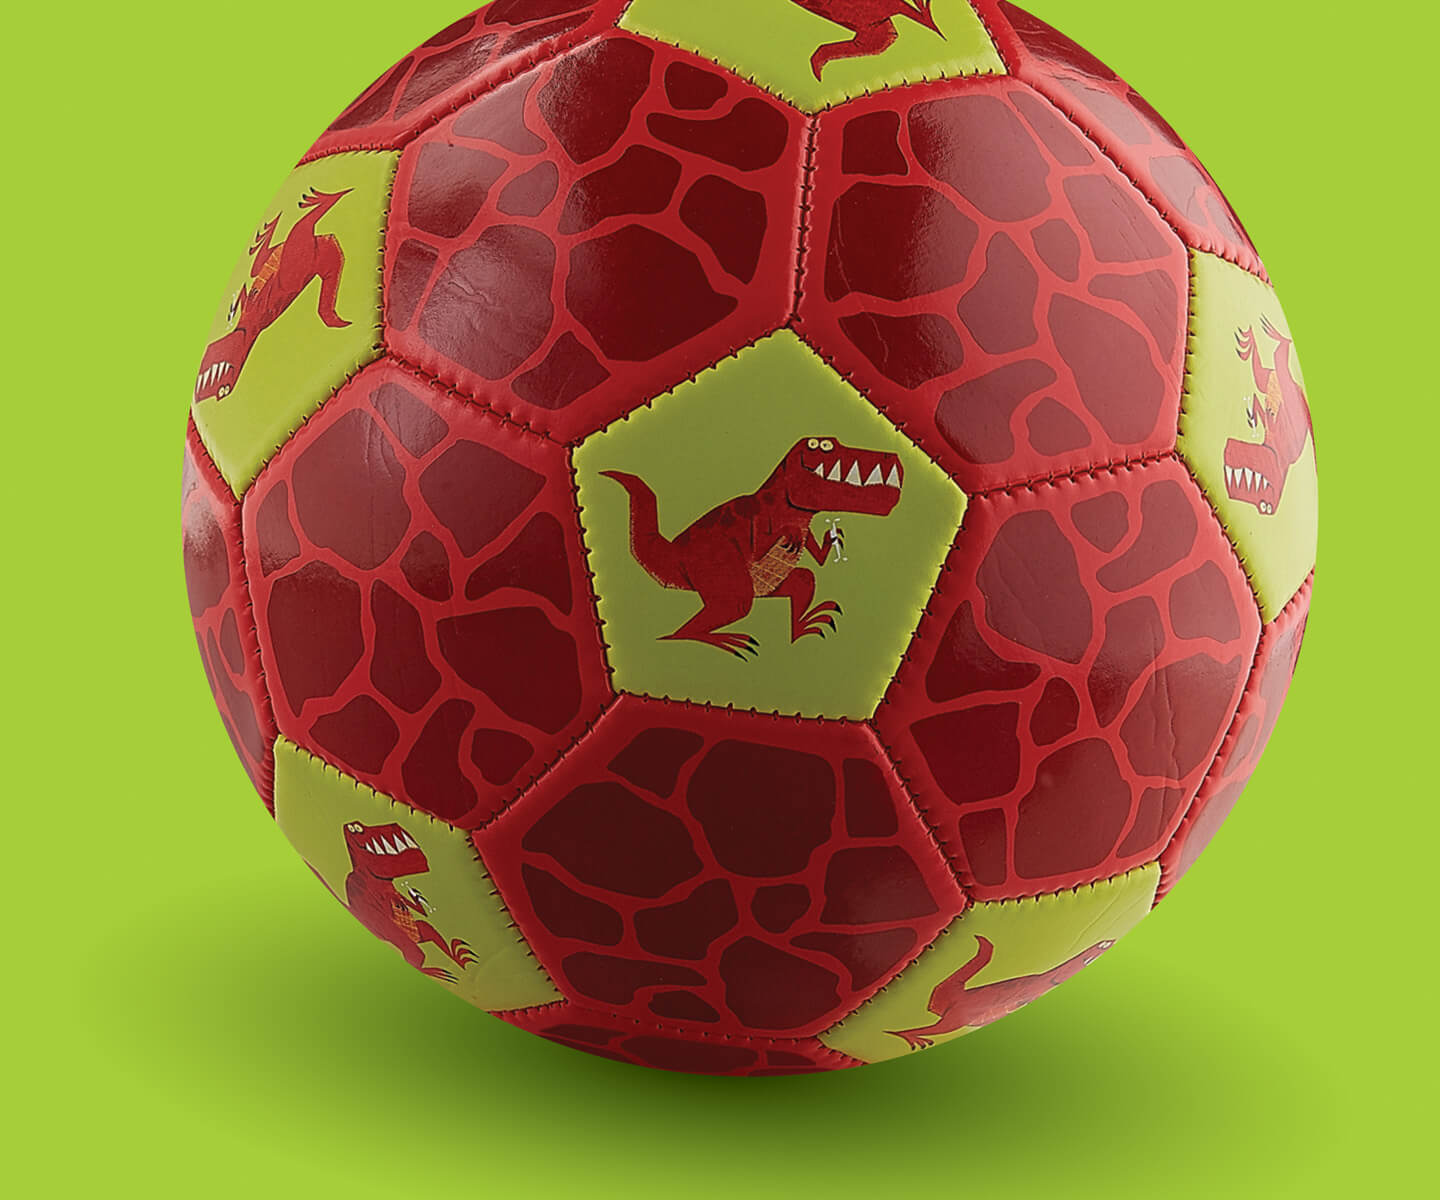 Size 2 Soccer Ball - Dinosaur